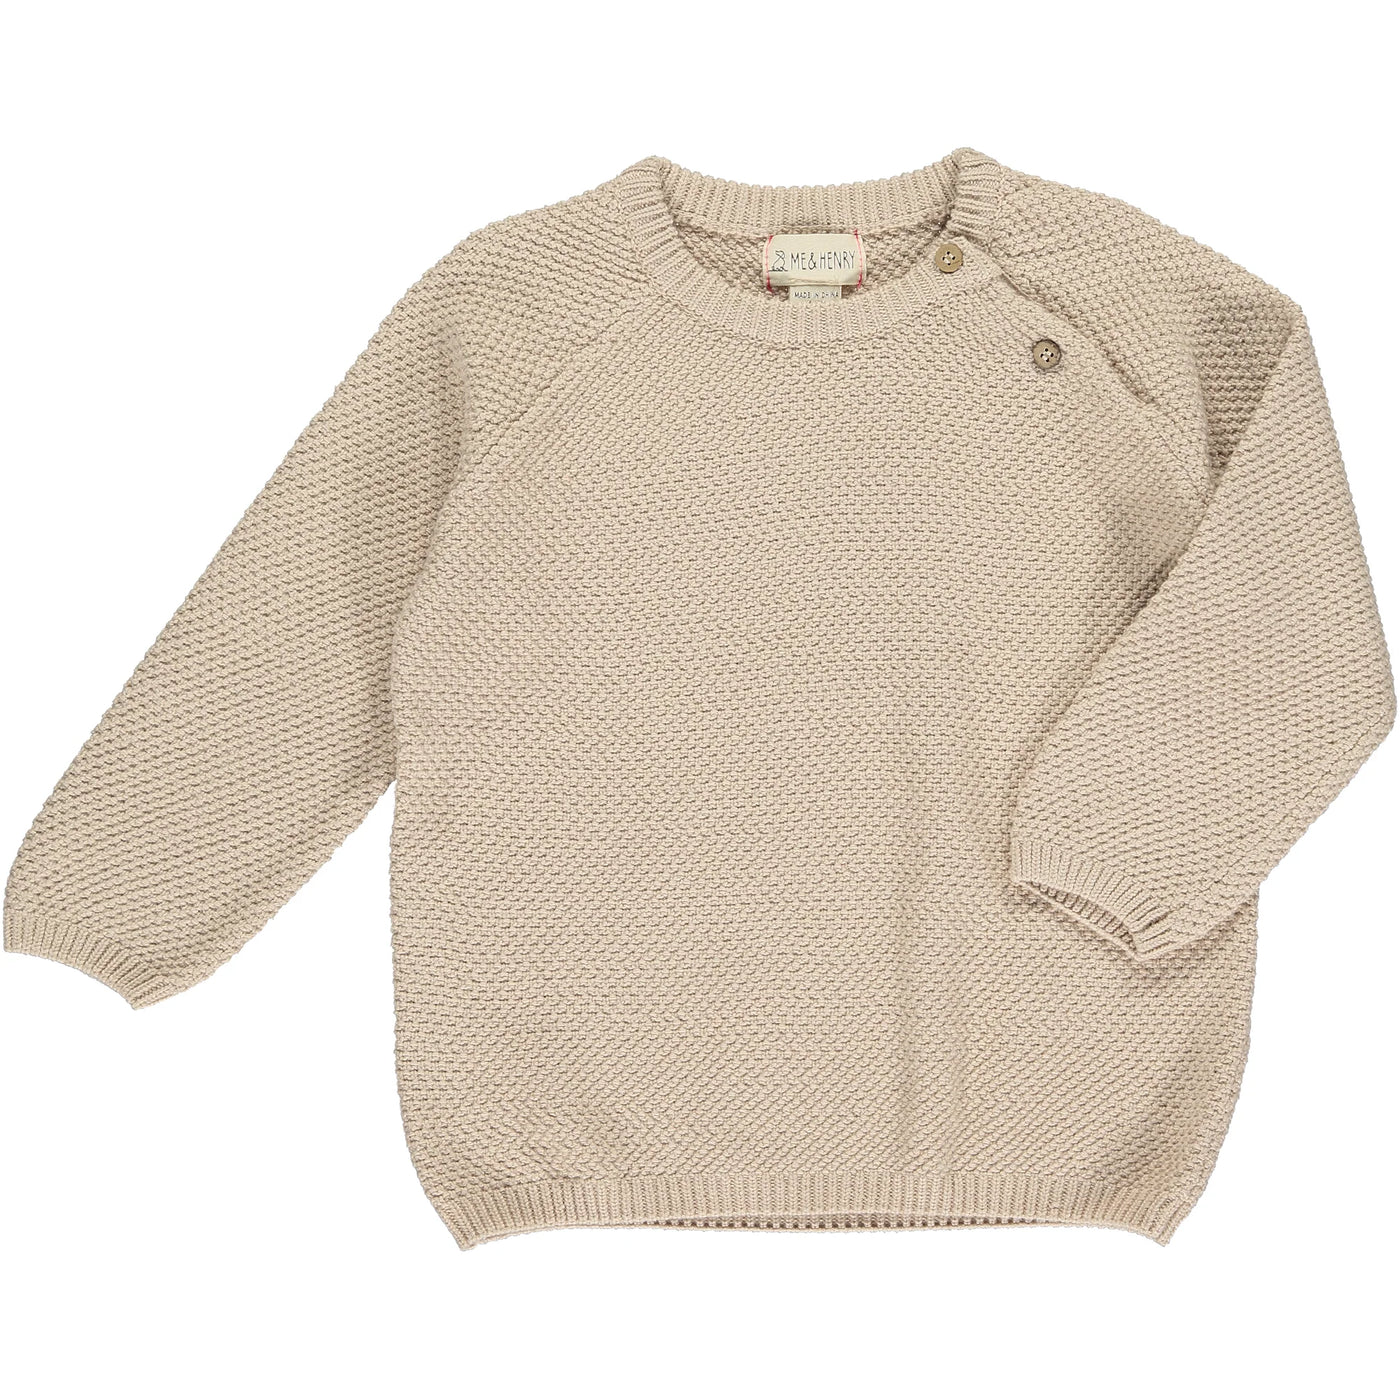 The Rowan Knit Sweater